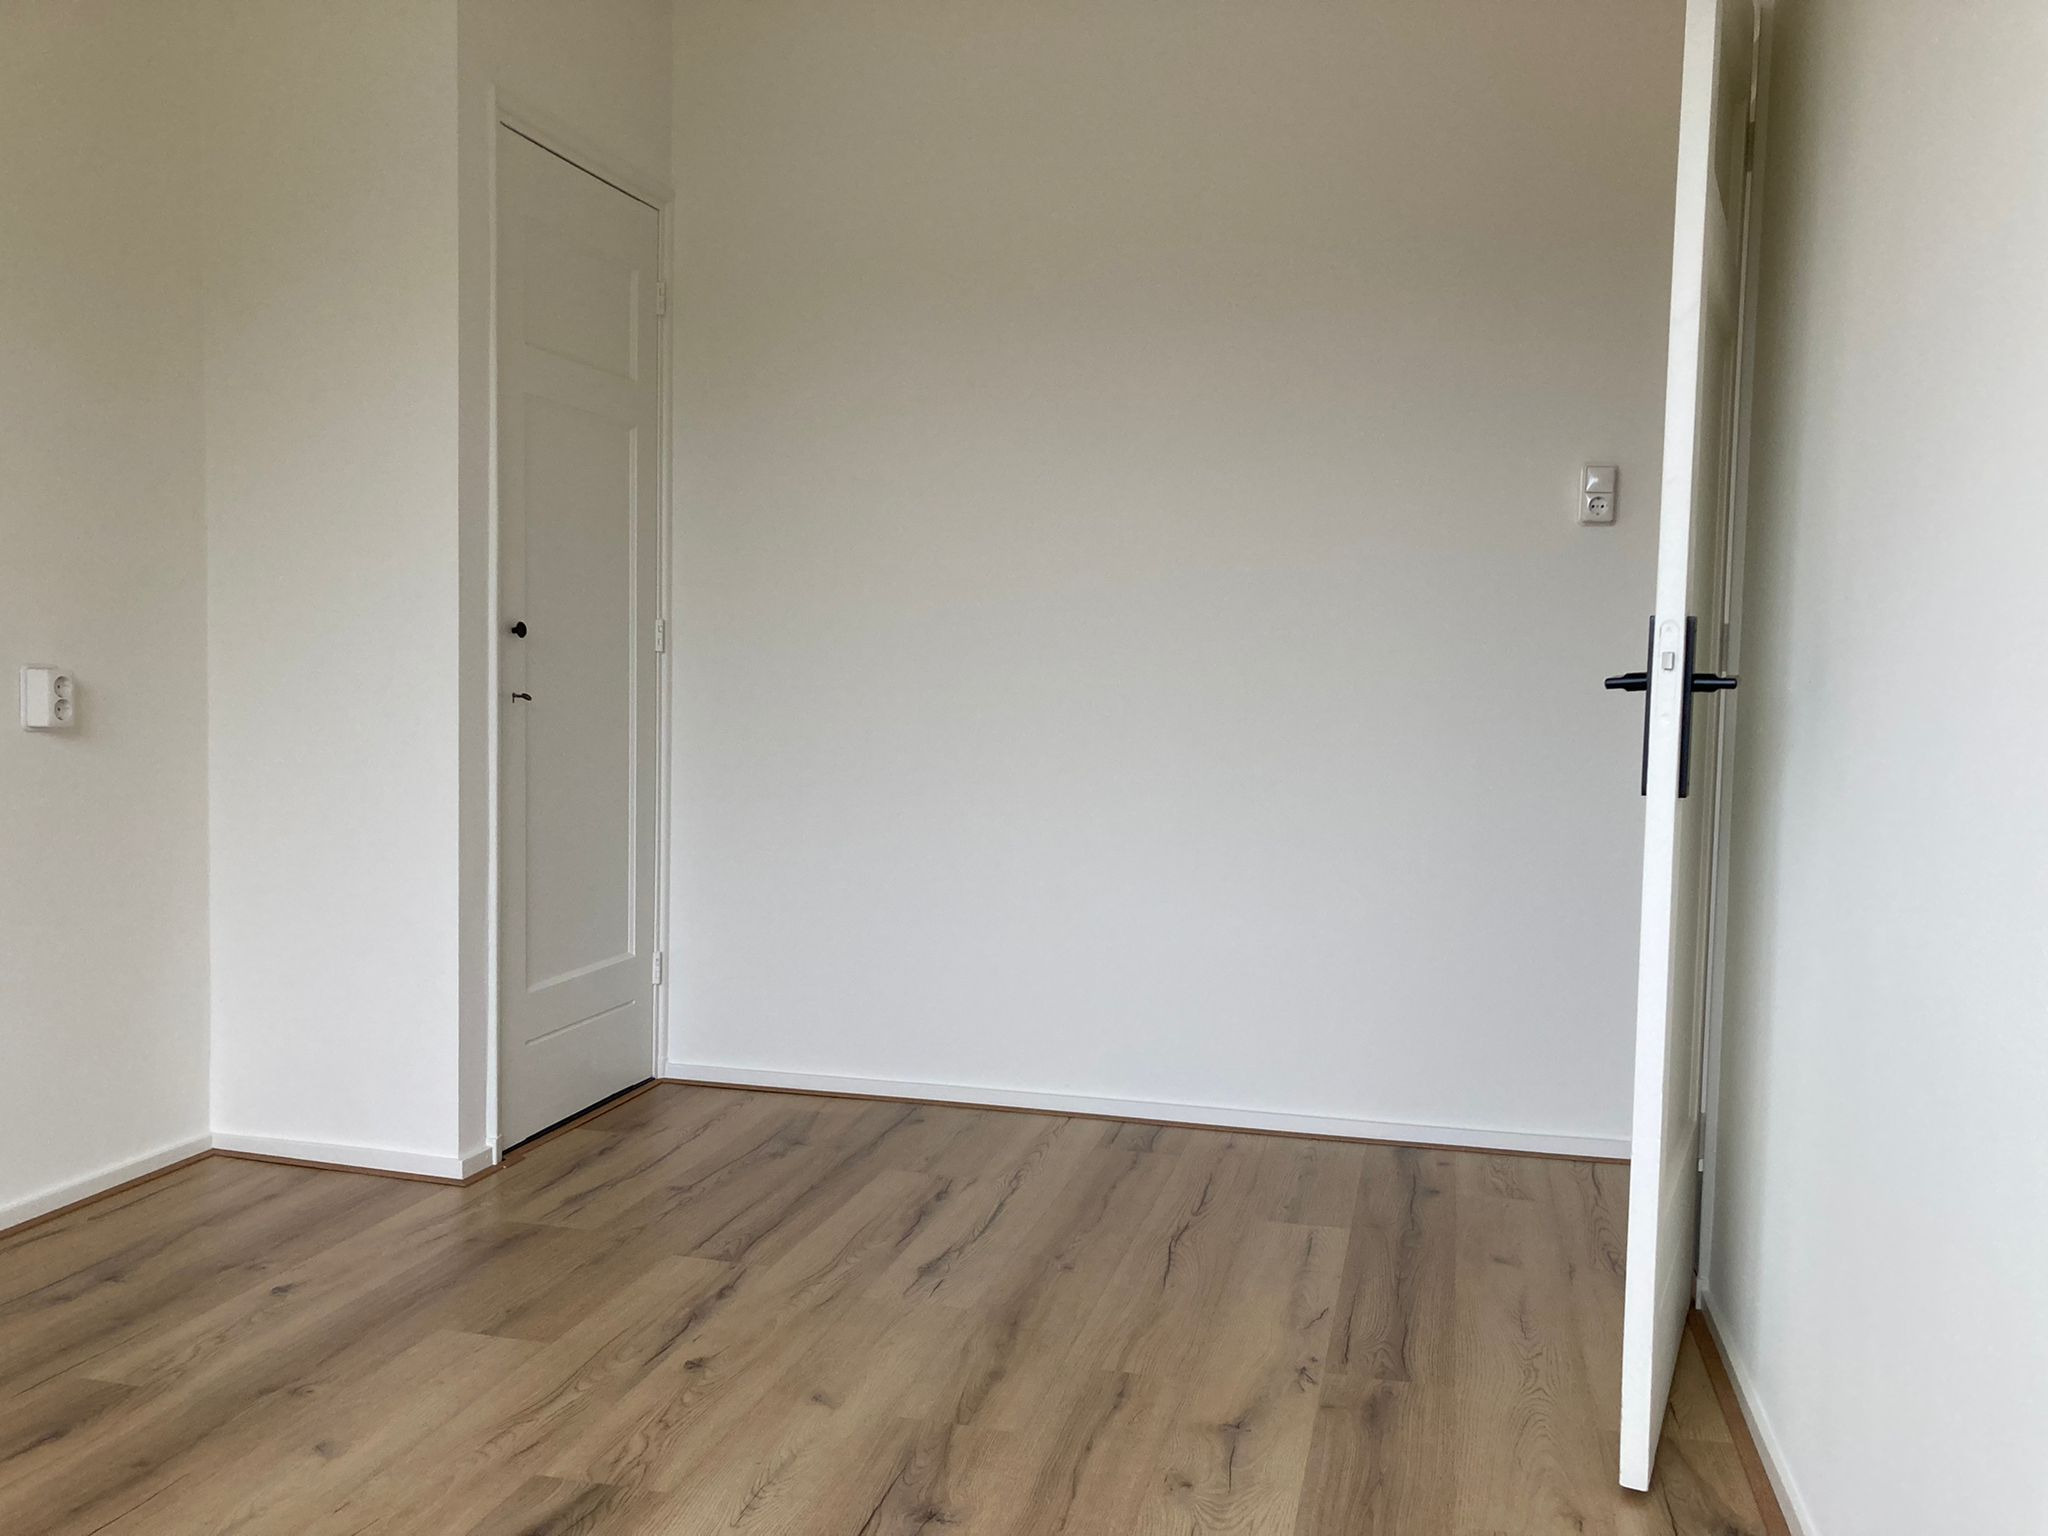 Woning / appartement - Arnhem - Johan de Wittlaan 267 3